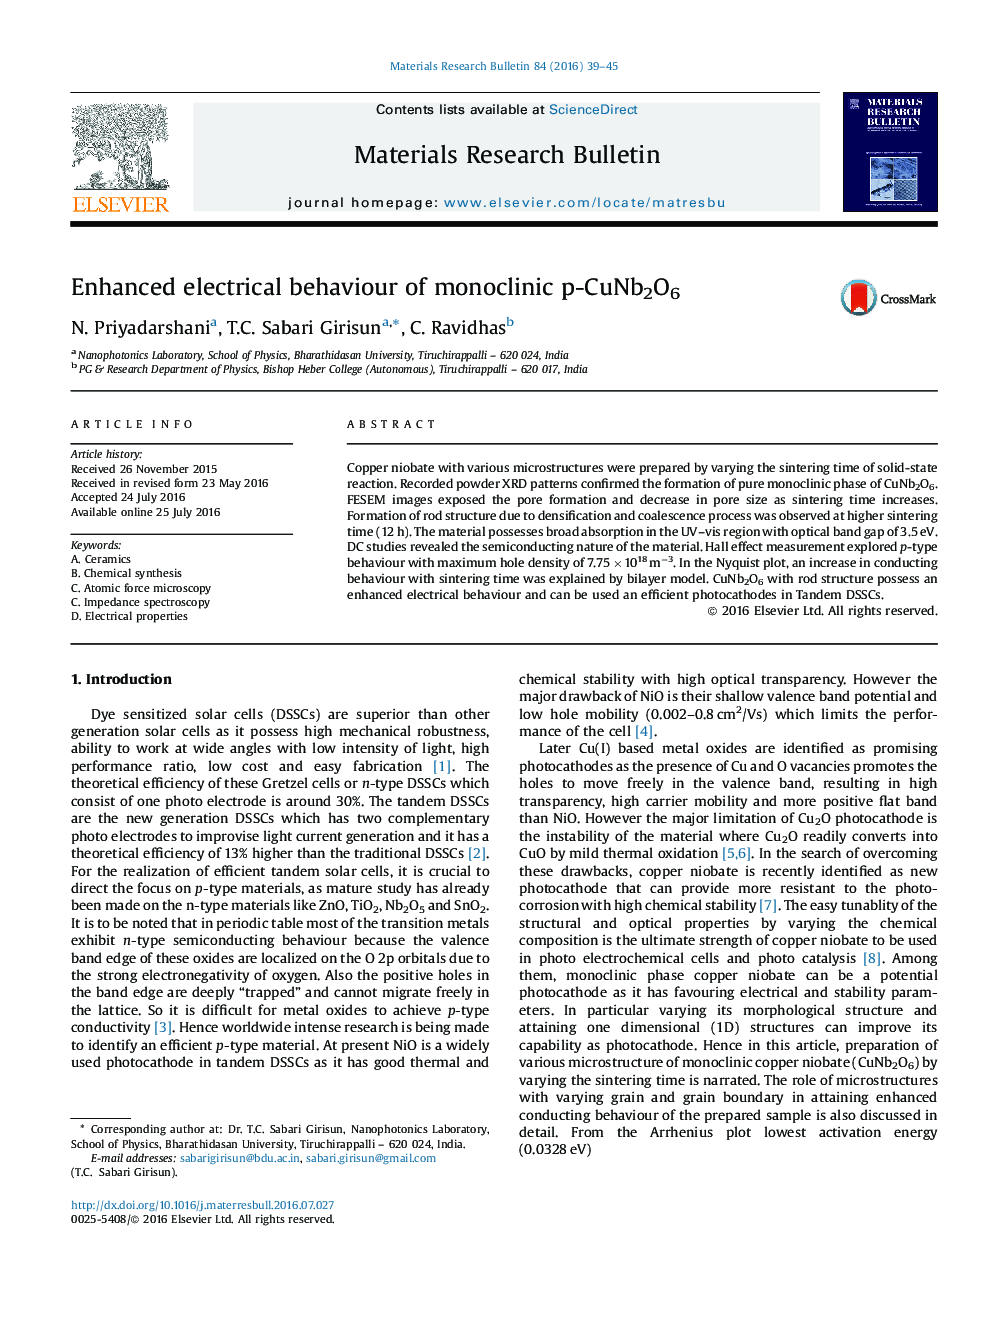 Enhanced electrical behaviour of monoclinic p-CuNb2O6